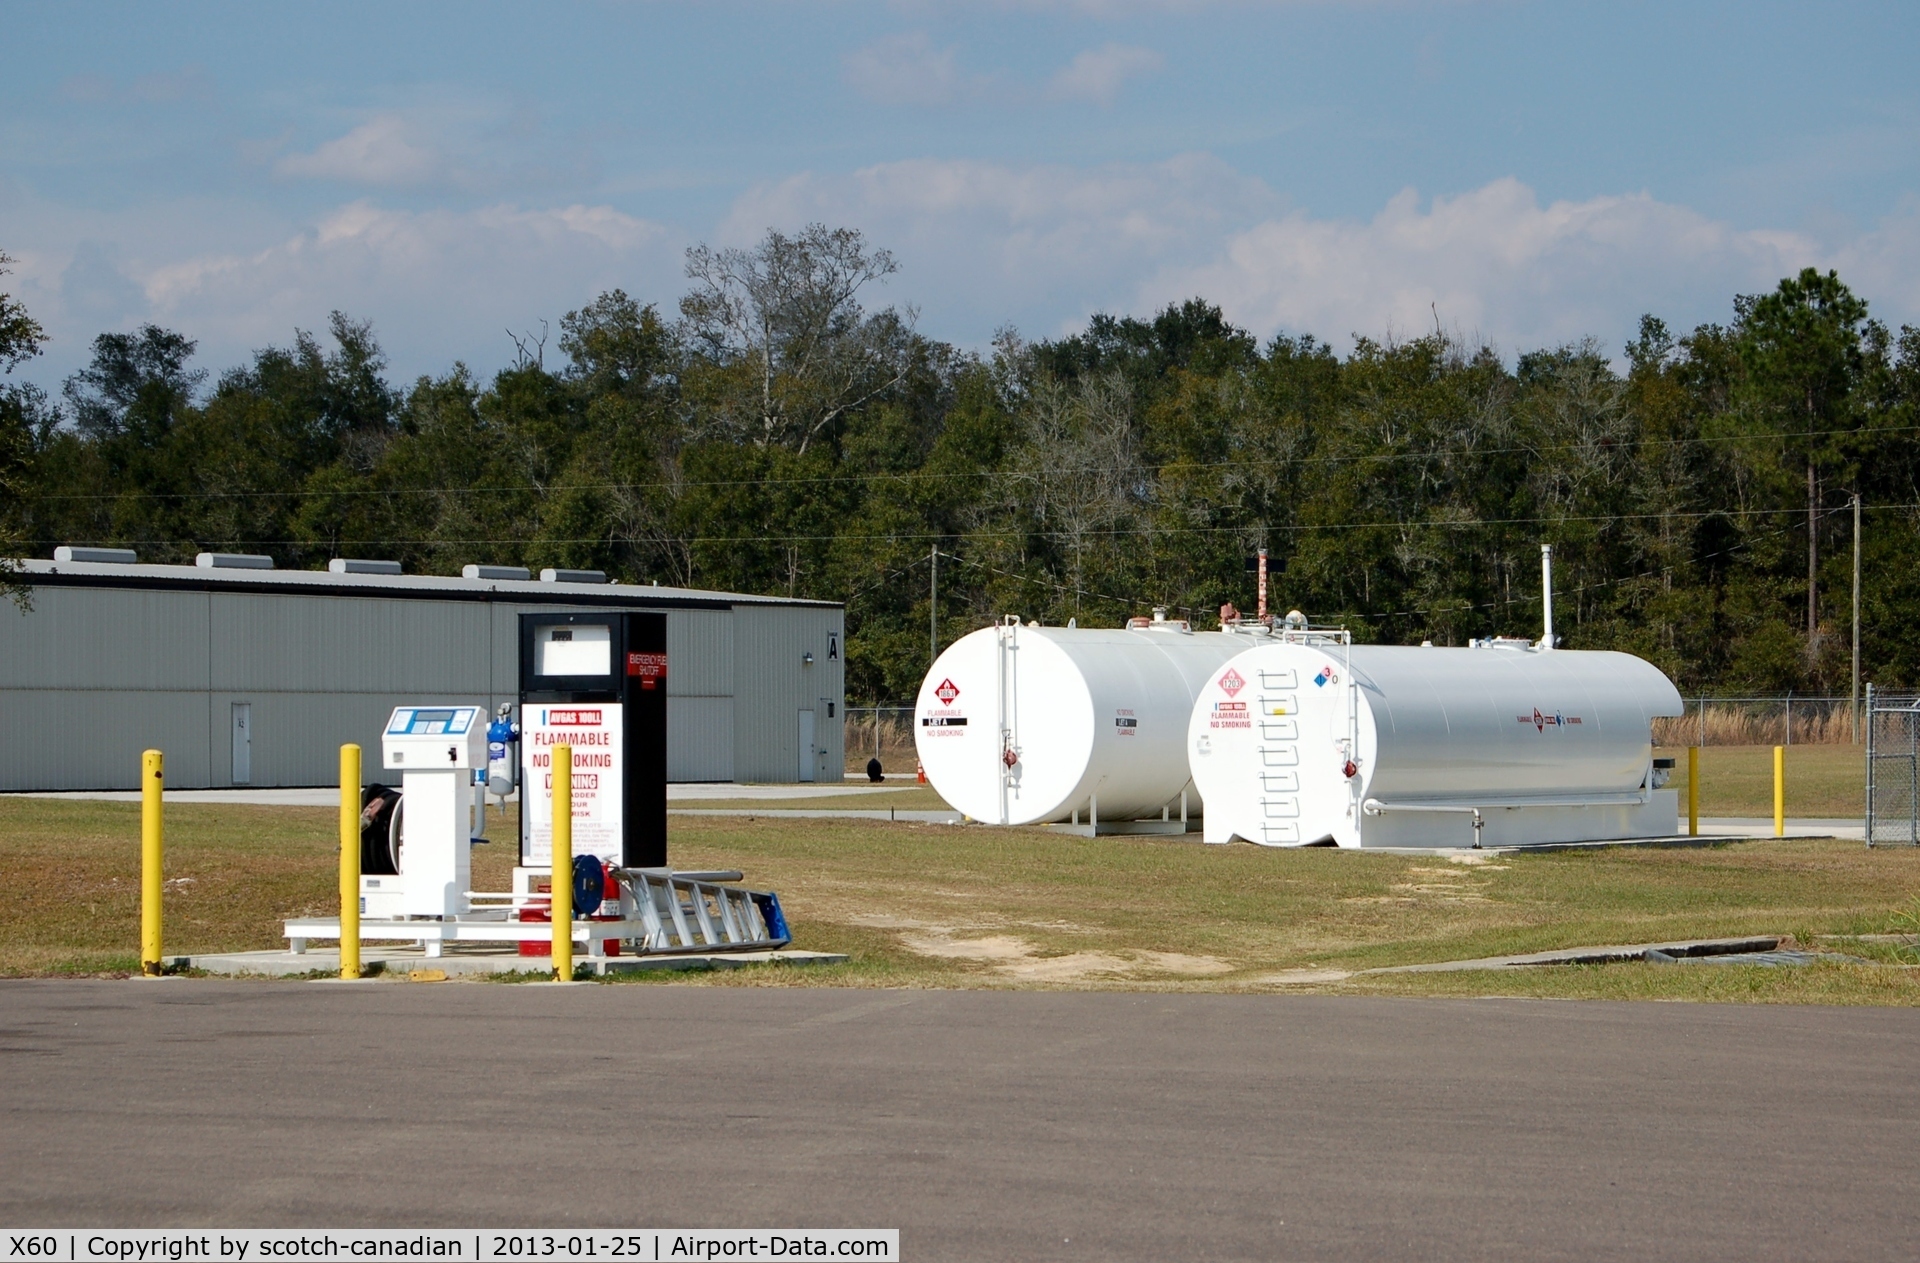 Williston Municipal Airport (X60) - Self Serve Fuel at Williston Municipal Airport, Williston, FL 